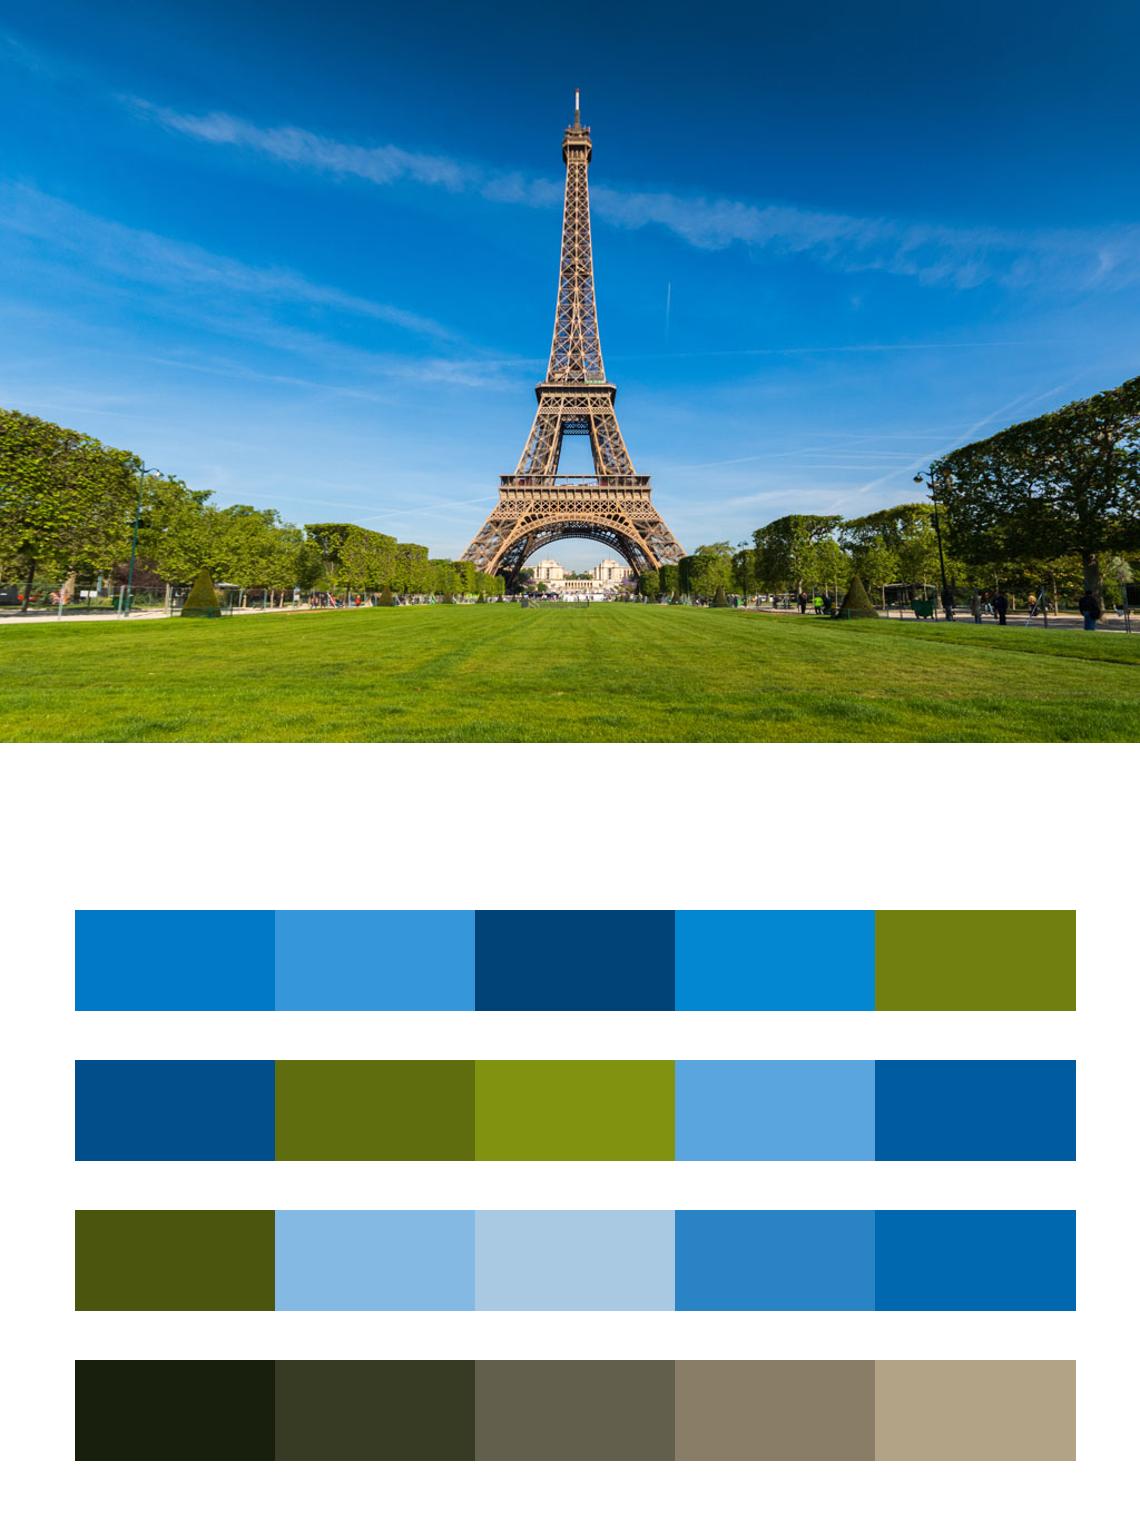 Париж Эйфелева башня на зеленой лужайке цвета